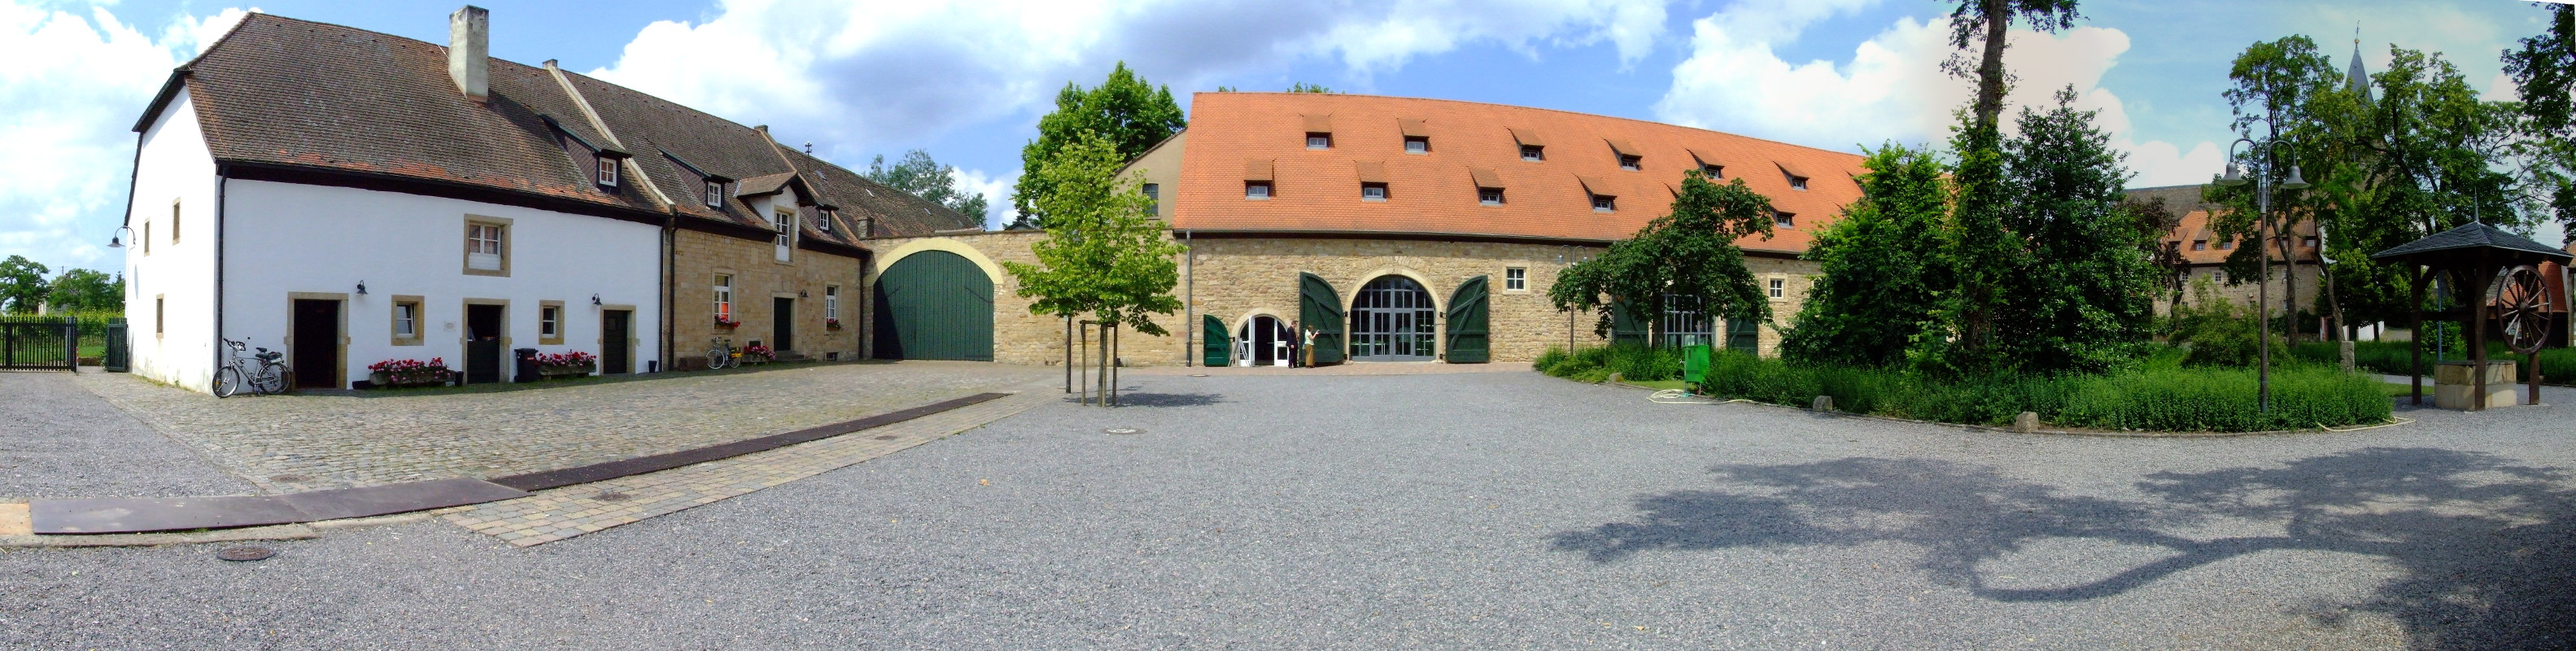 Herrenhof in Mussbach